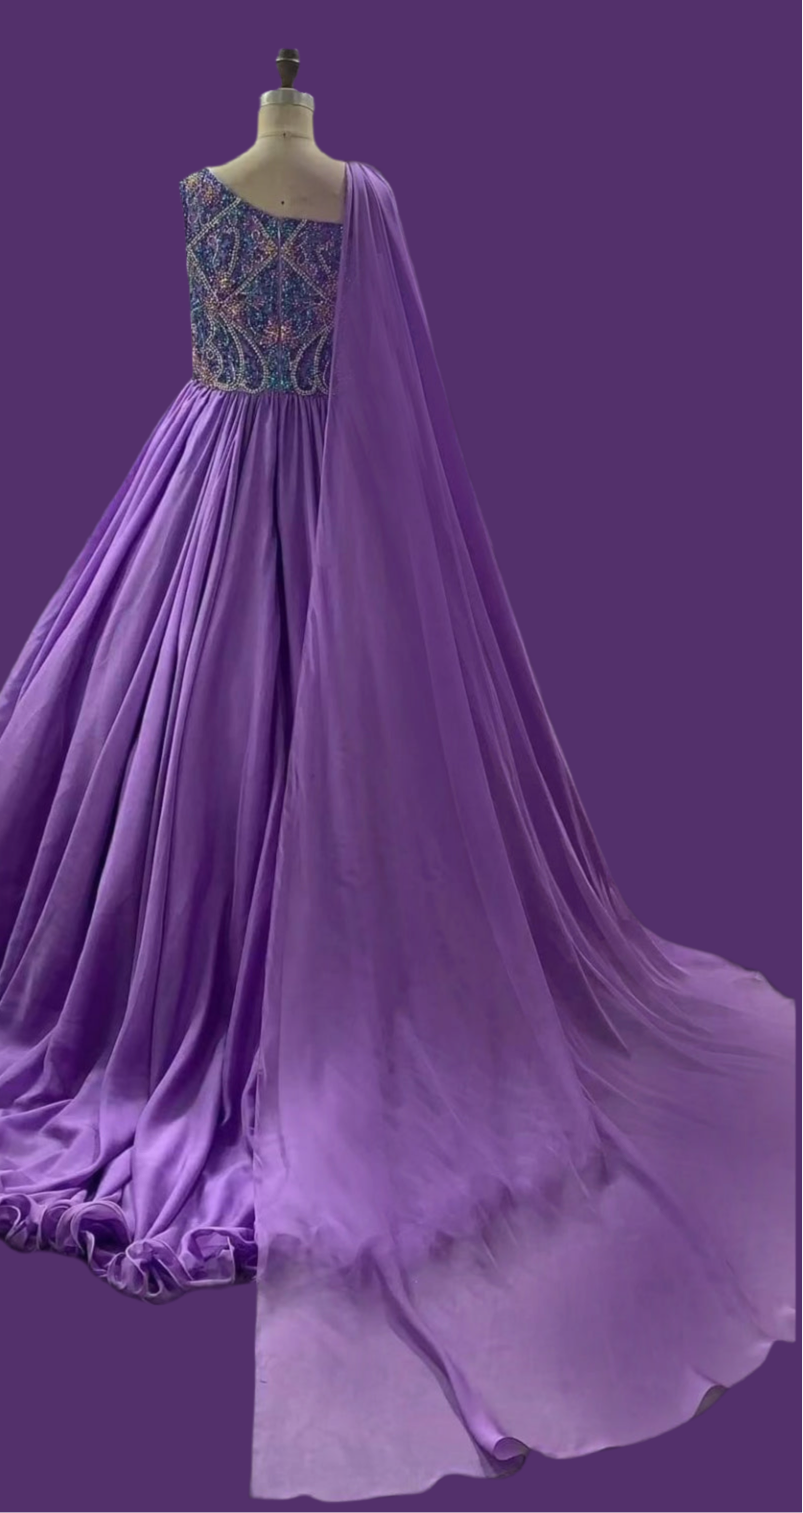 Glitzy Beaded Bodice Lilac Teenage Girl Ball Gowns